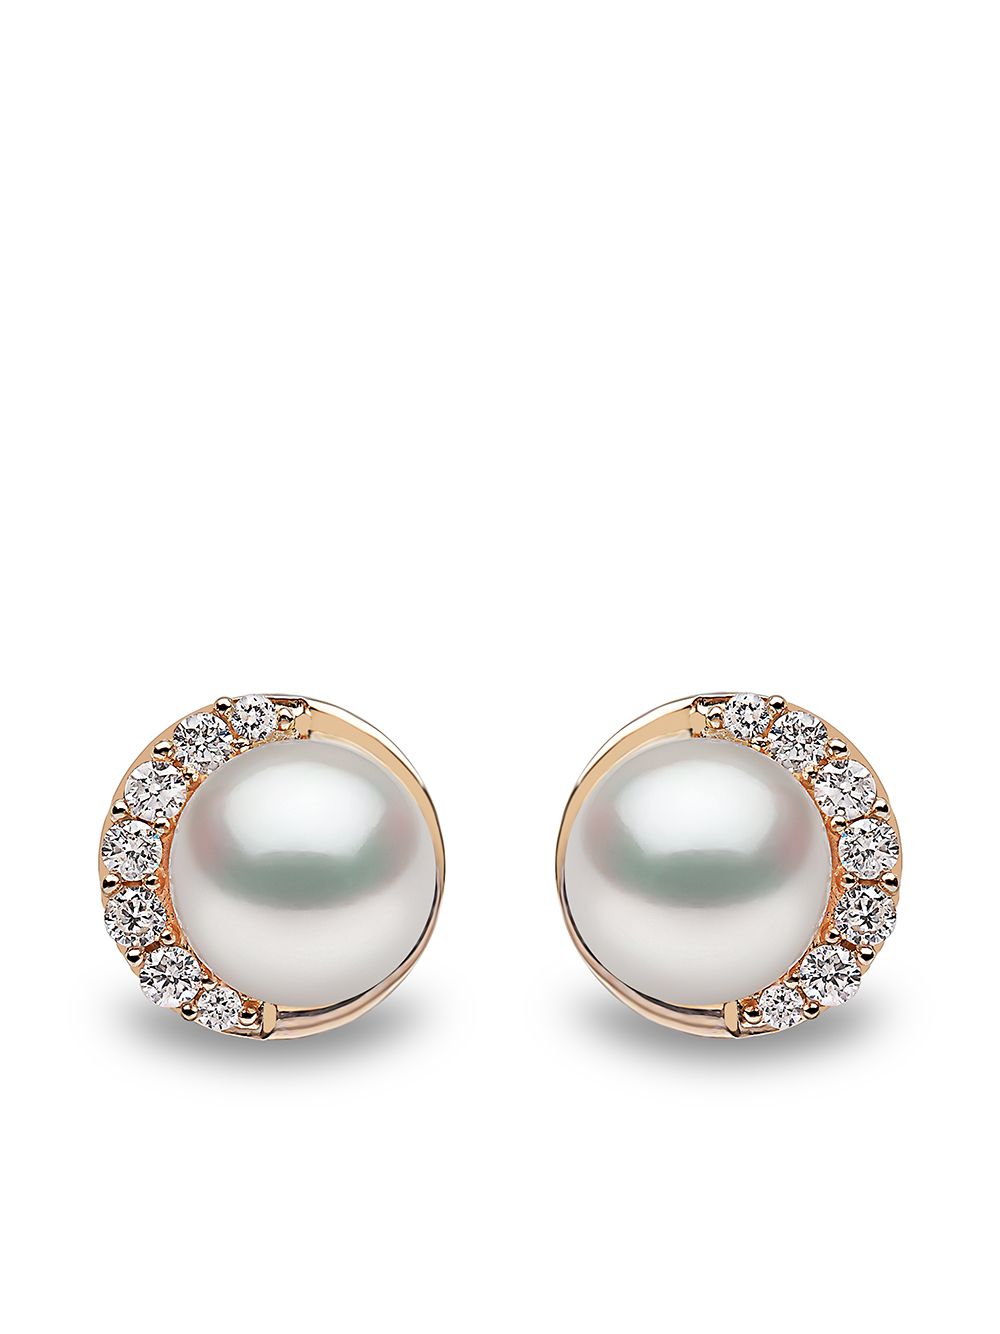 Yoko London 18kt Yellow Gold Trend Freshwater Pearl And Diamond Stud Earrings